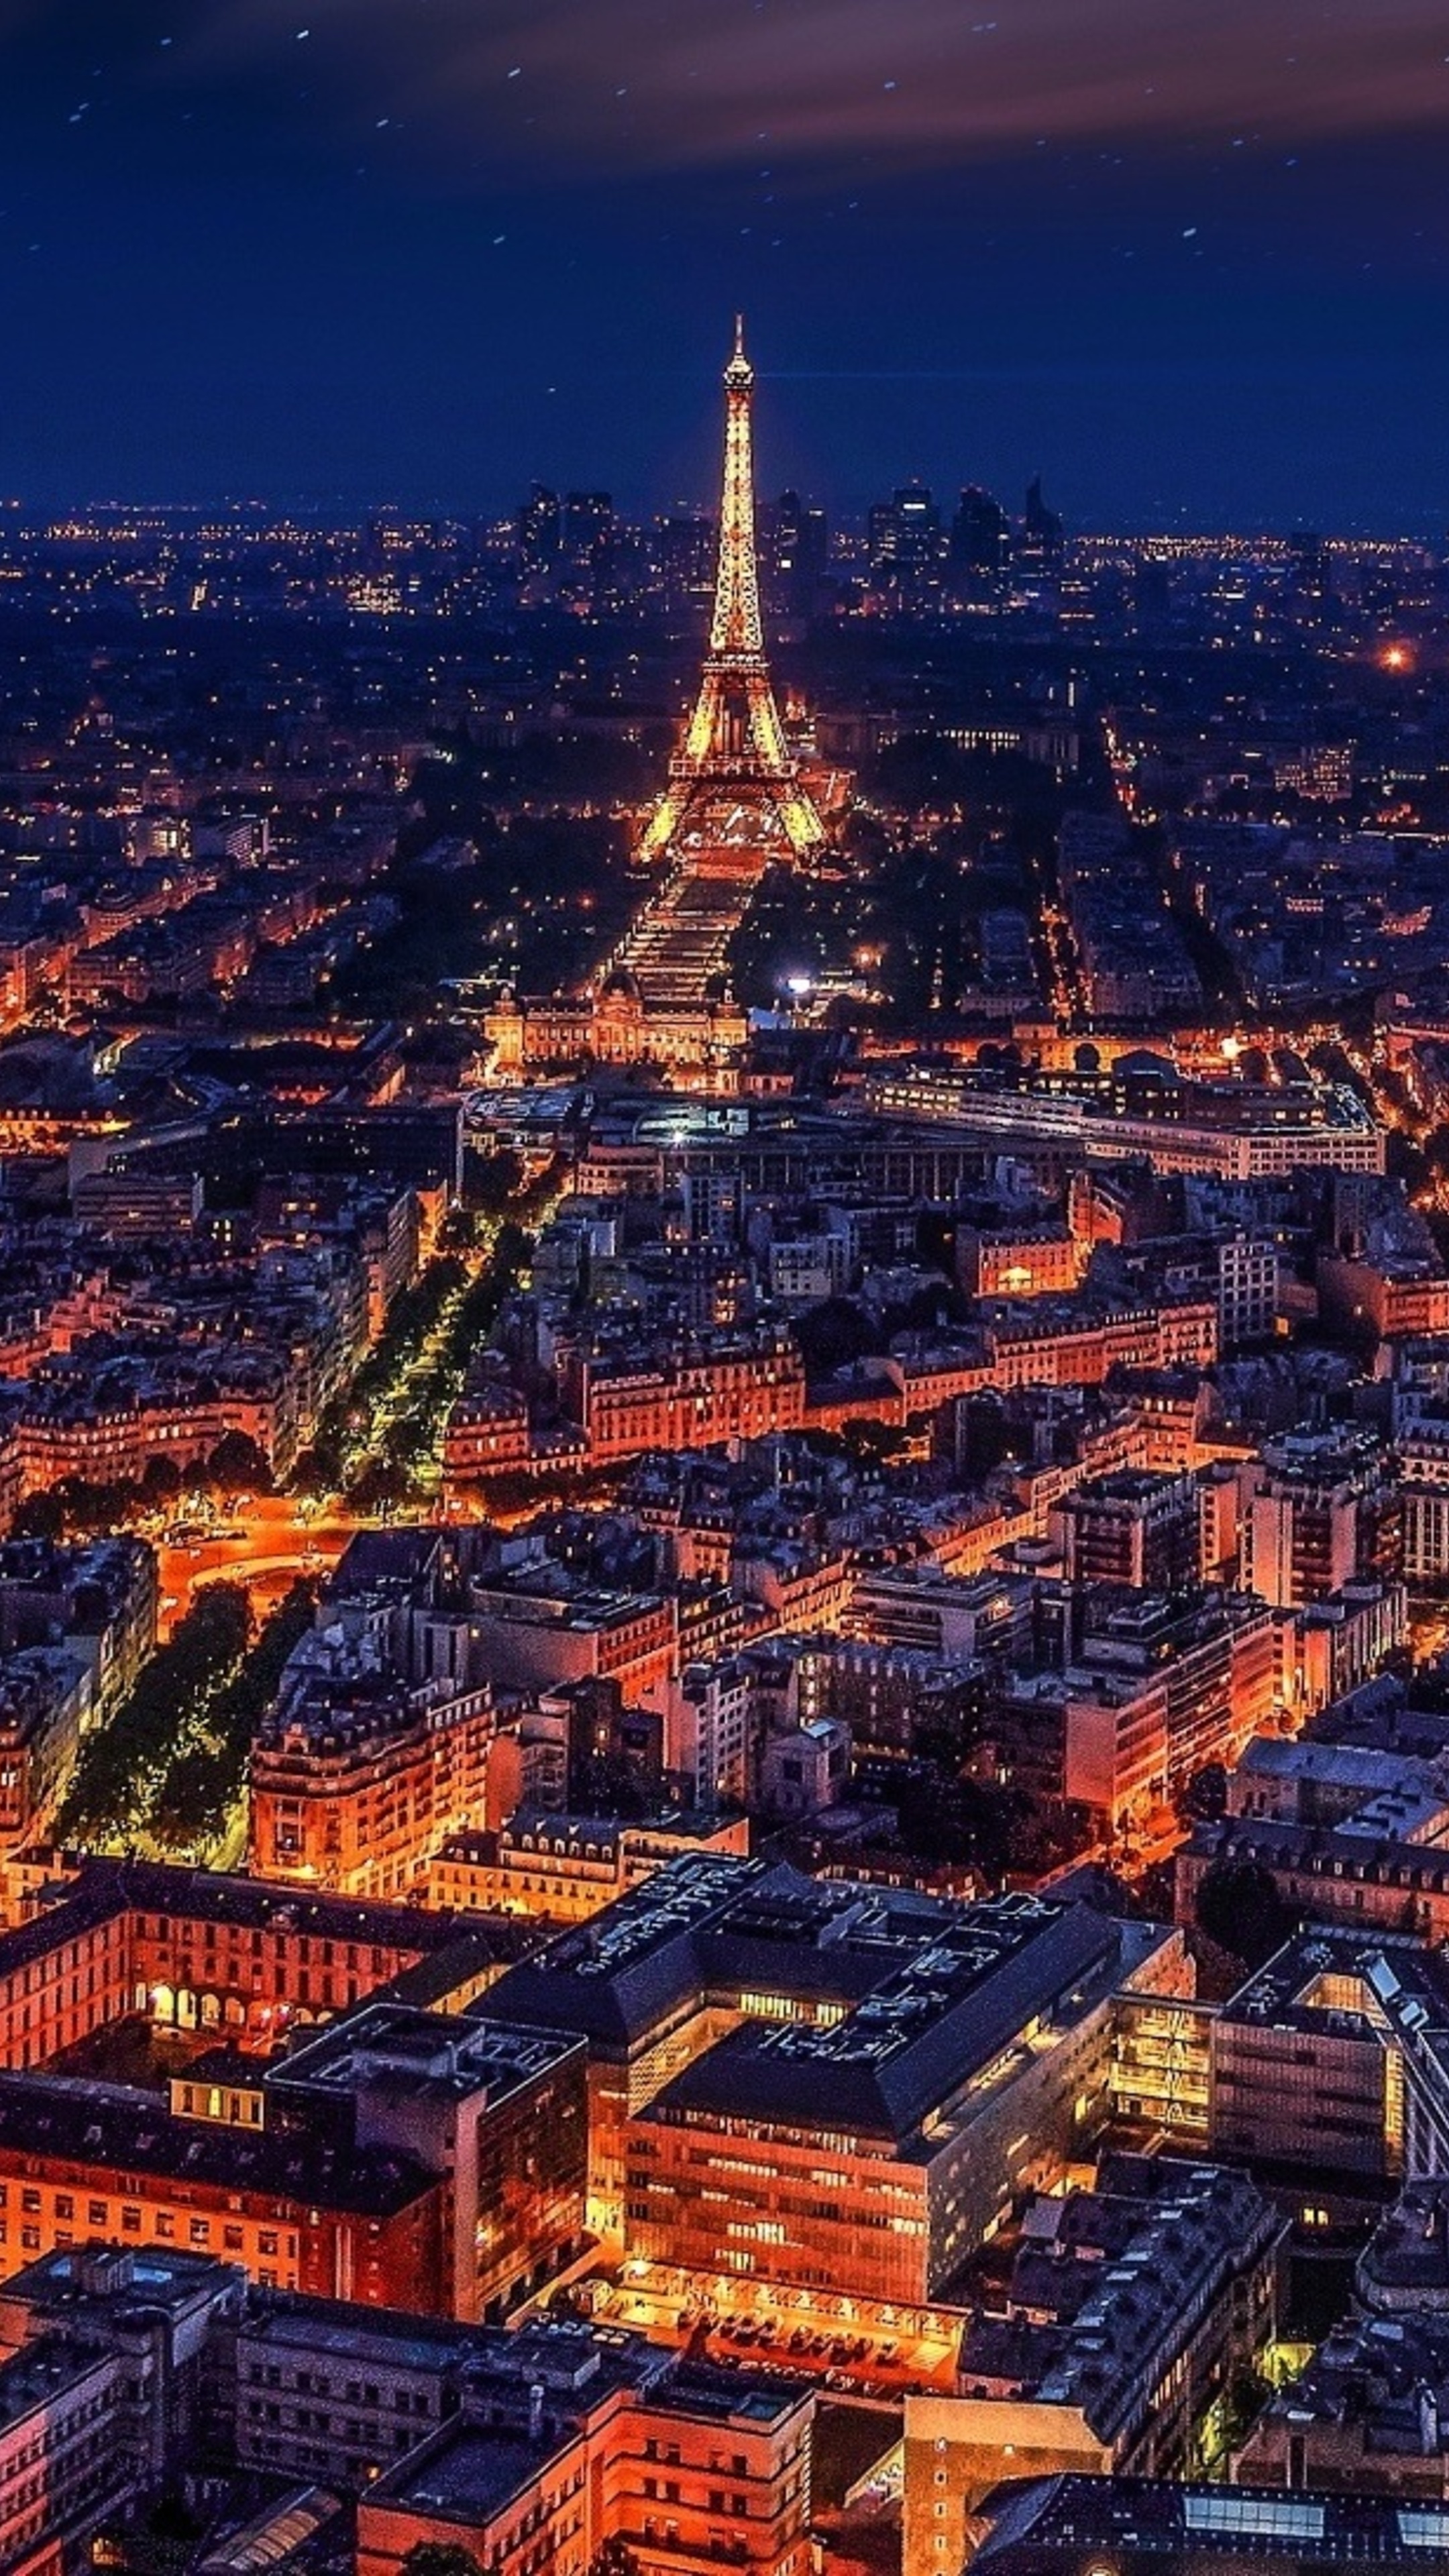 Paris: The center of the Ile-de-France region, Urban design, Aerial view. 2160x3840 4K Wallpaper.